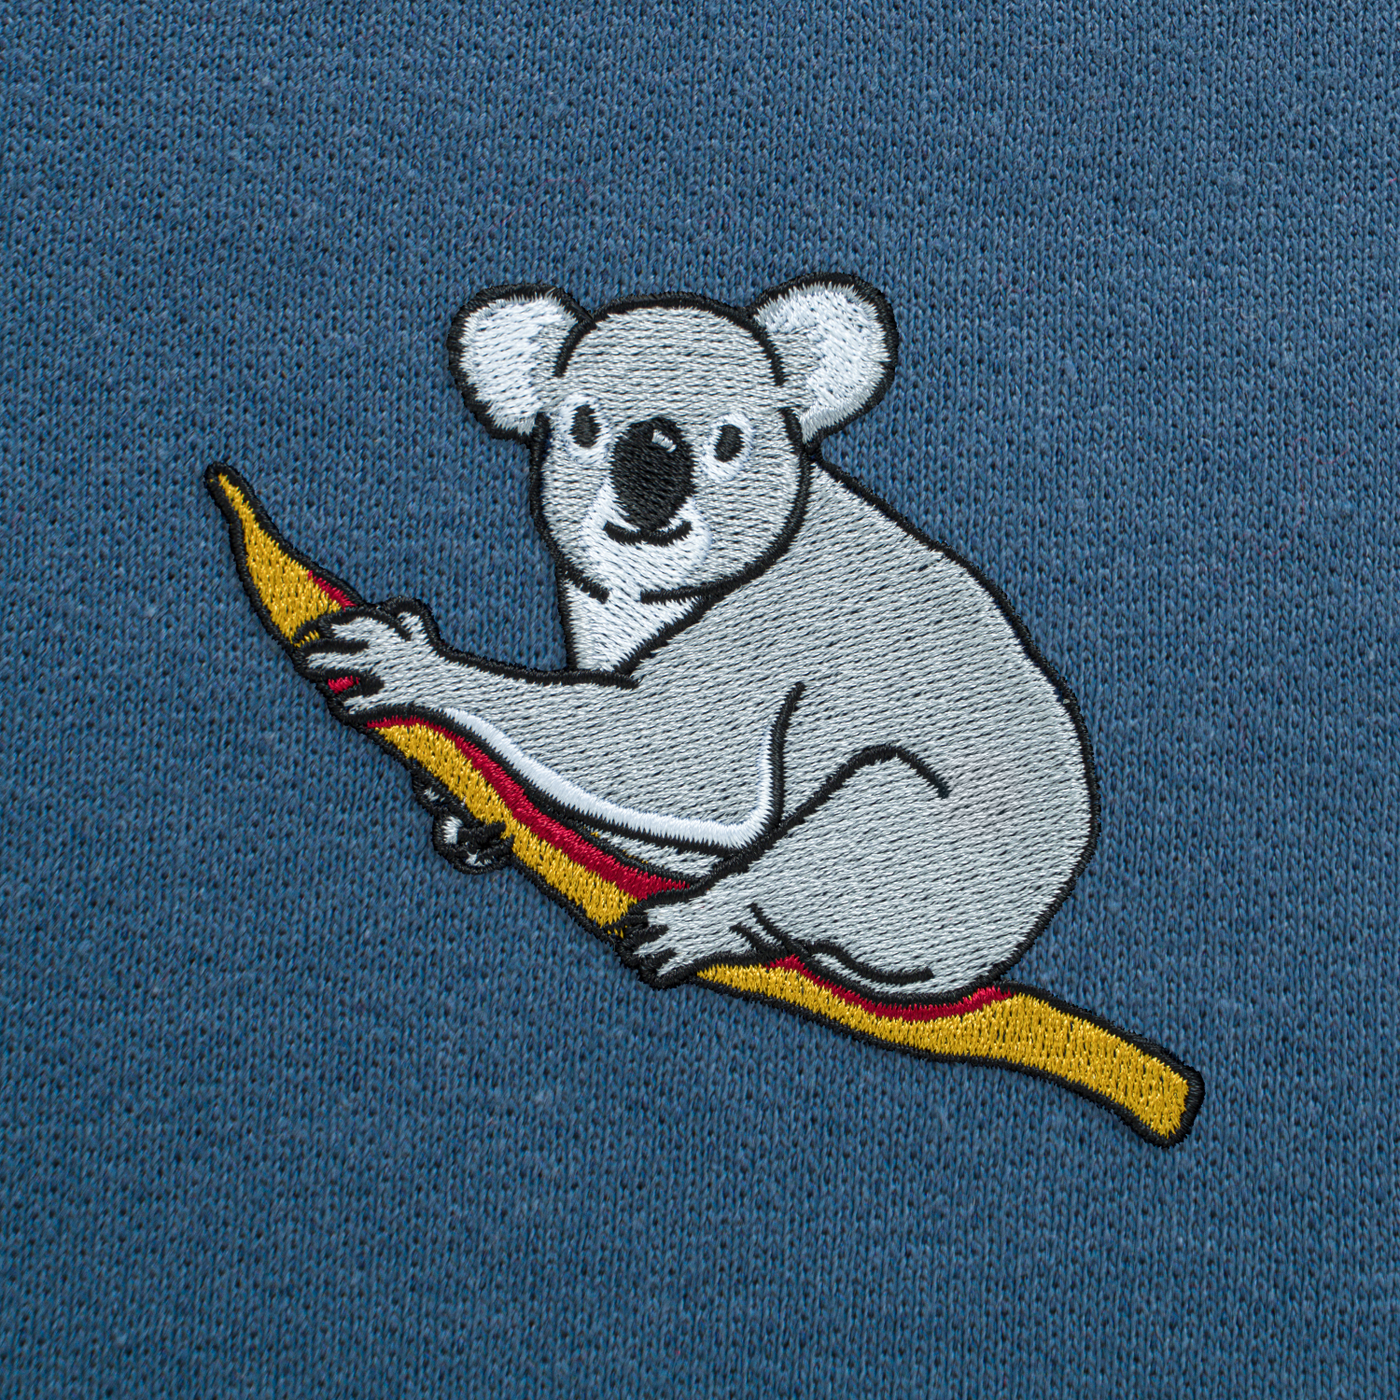 Bobby's Planet Men's Embroidered Koala Sweatshirt from Australia Down Under Animals Collection in Indigo Blue Color#color_indigo-blue